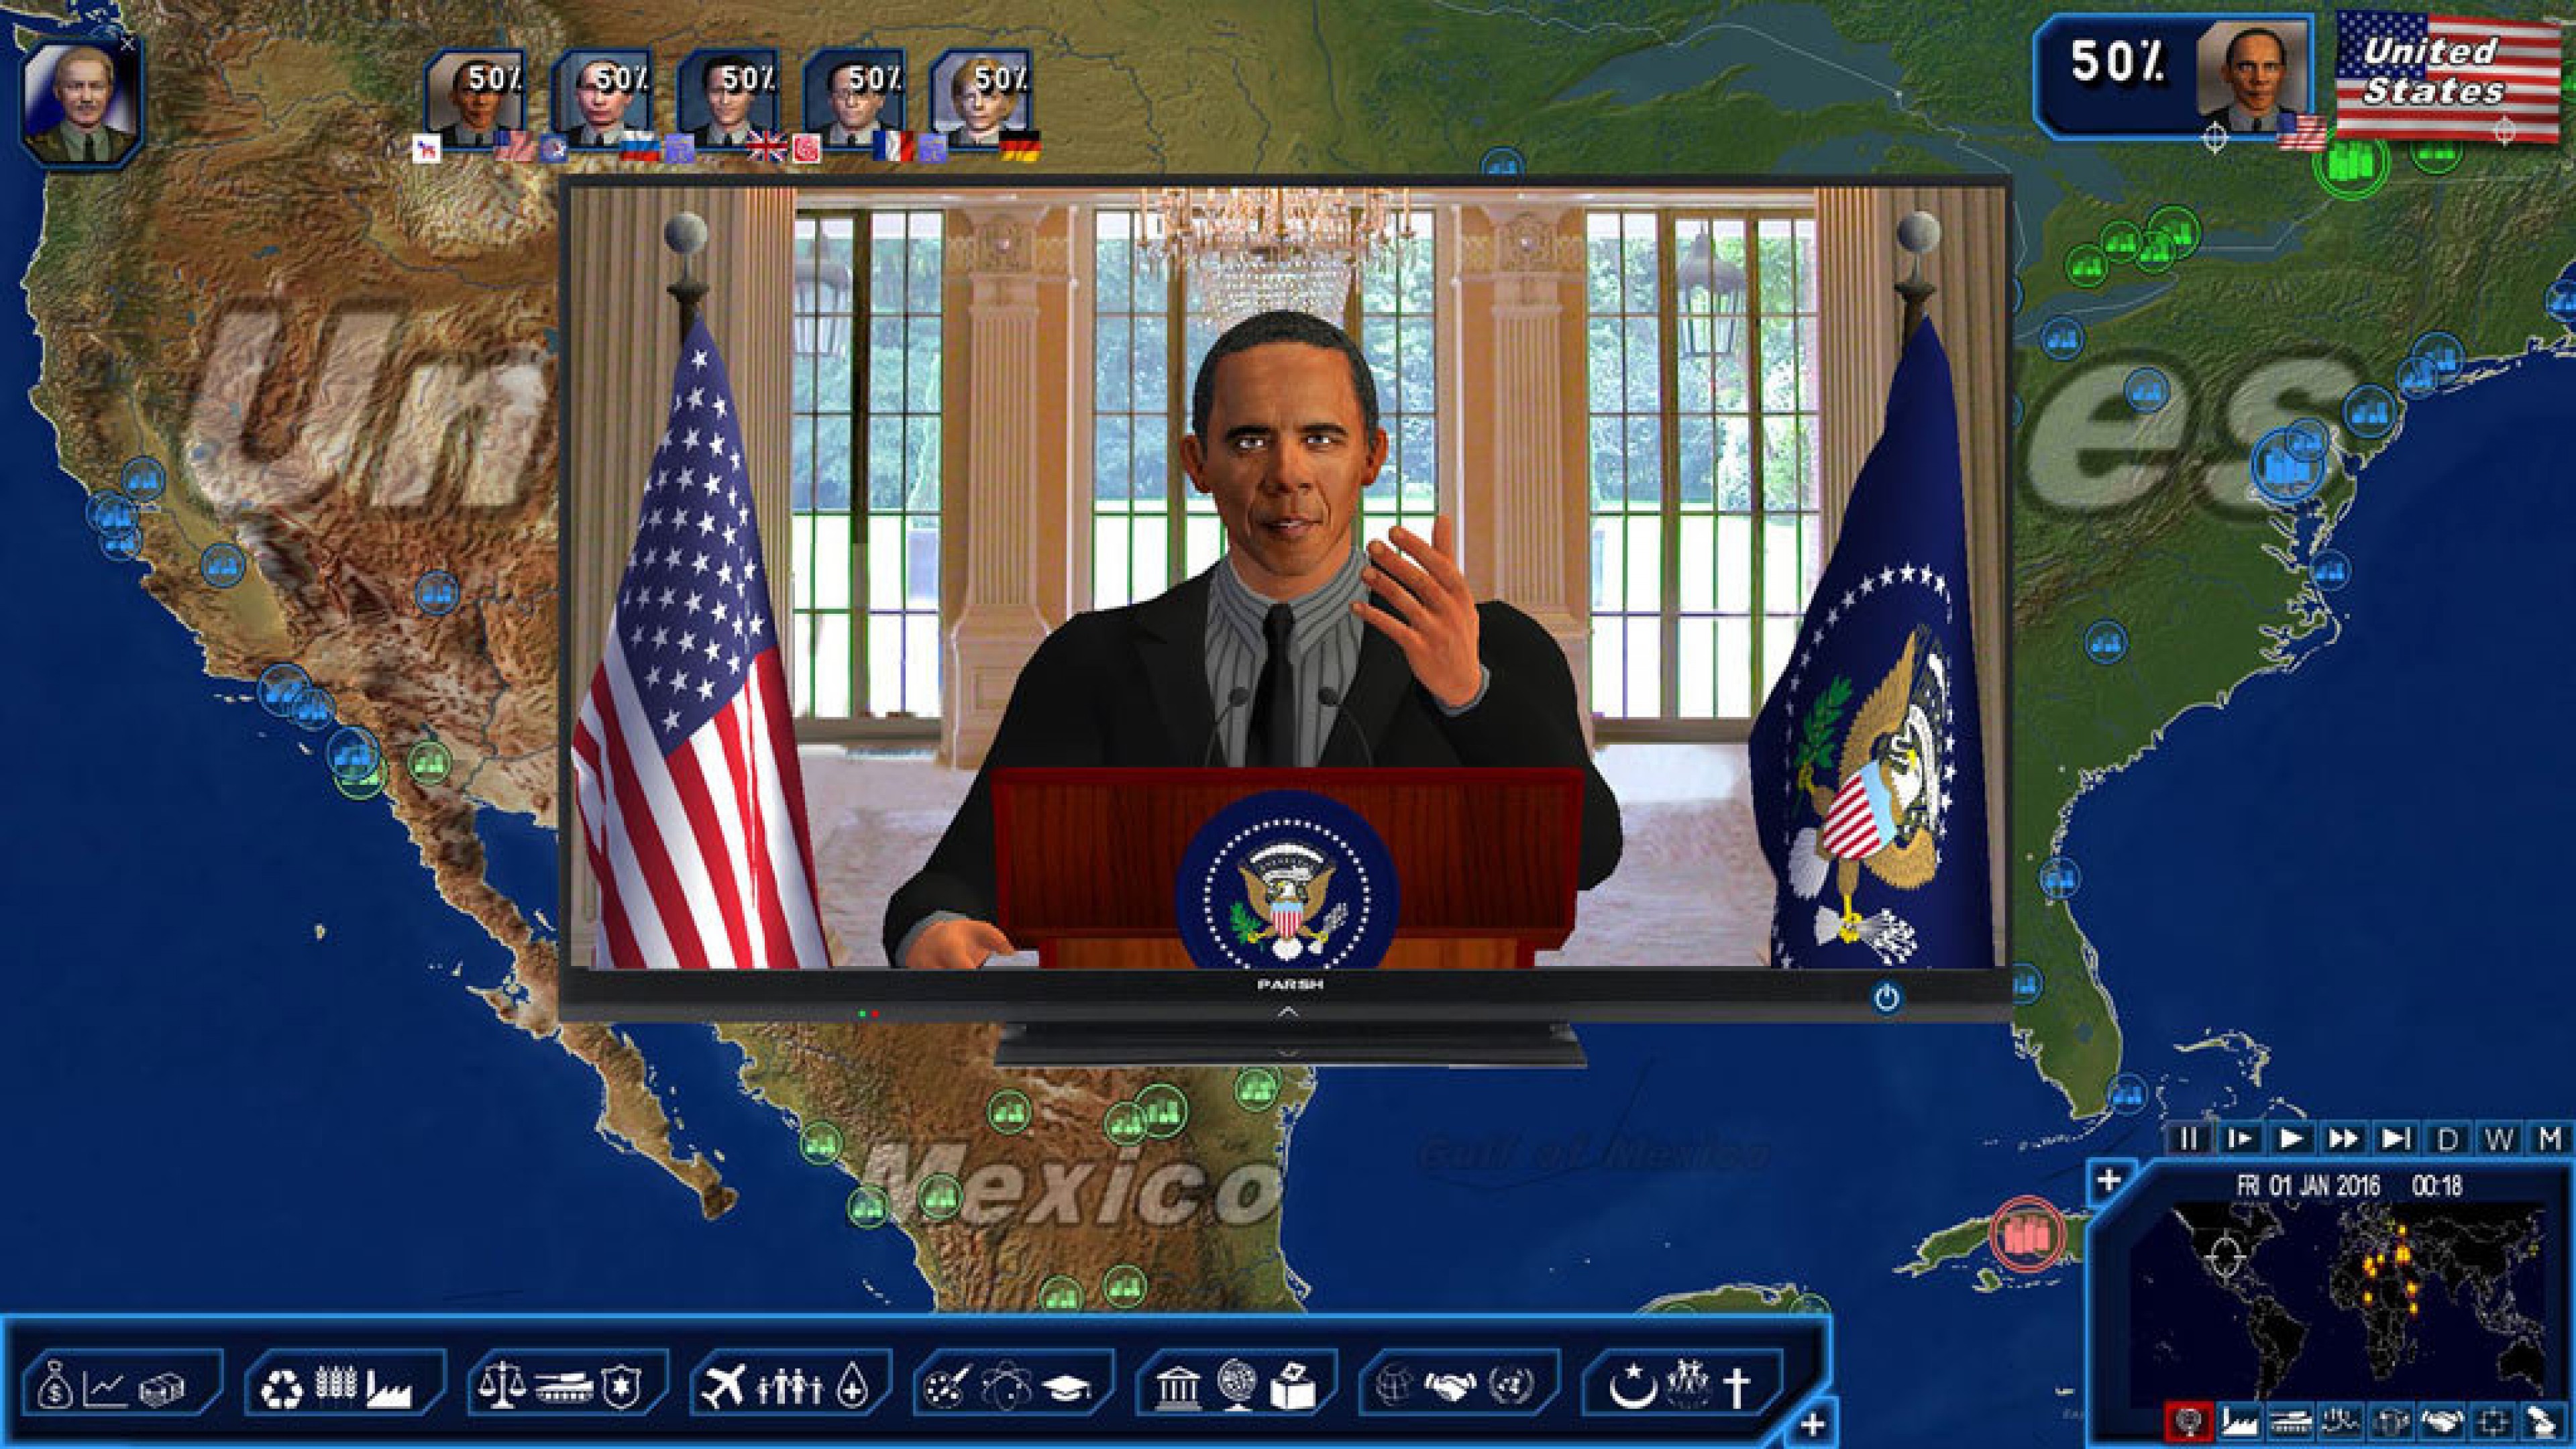 download geo political simulator power & revolution 2020 edition for free